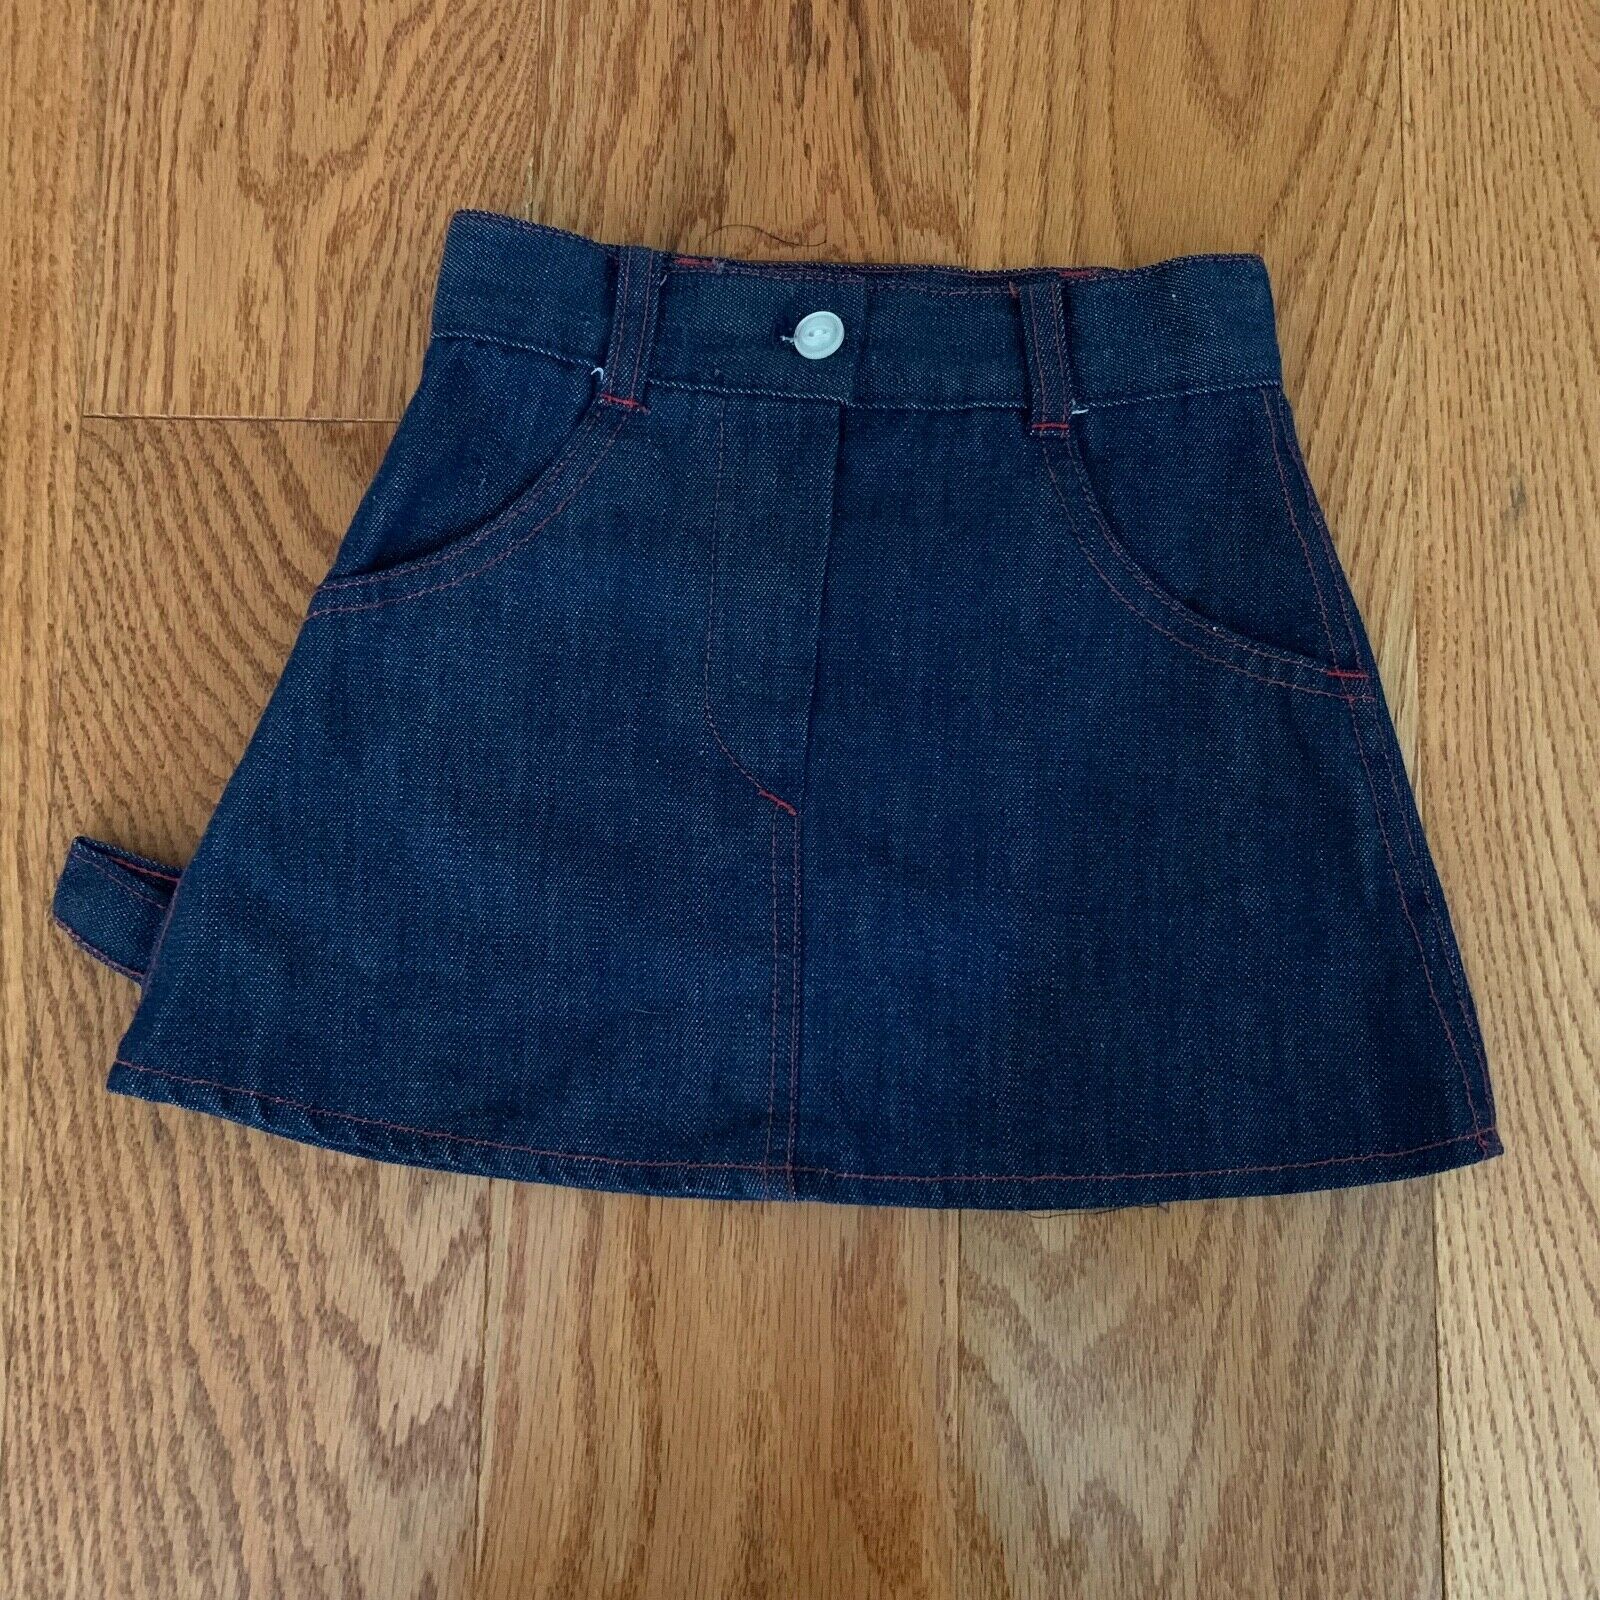 Little Girls 1970's  Vintage Size 3 Blue Denim Jean Skirt w/ Embroidery Flower